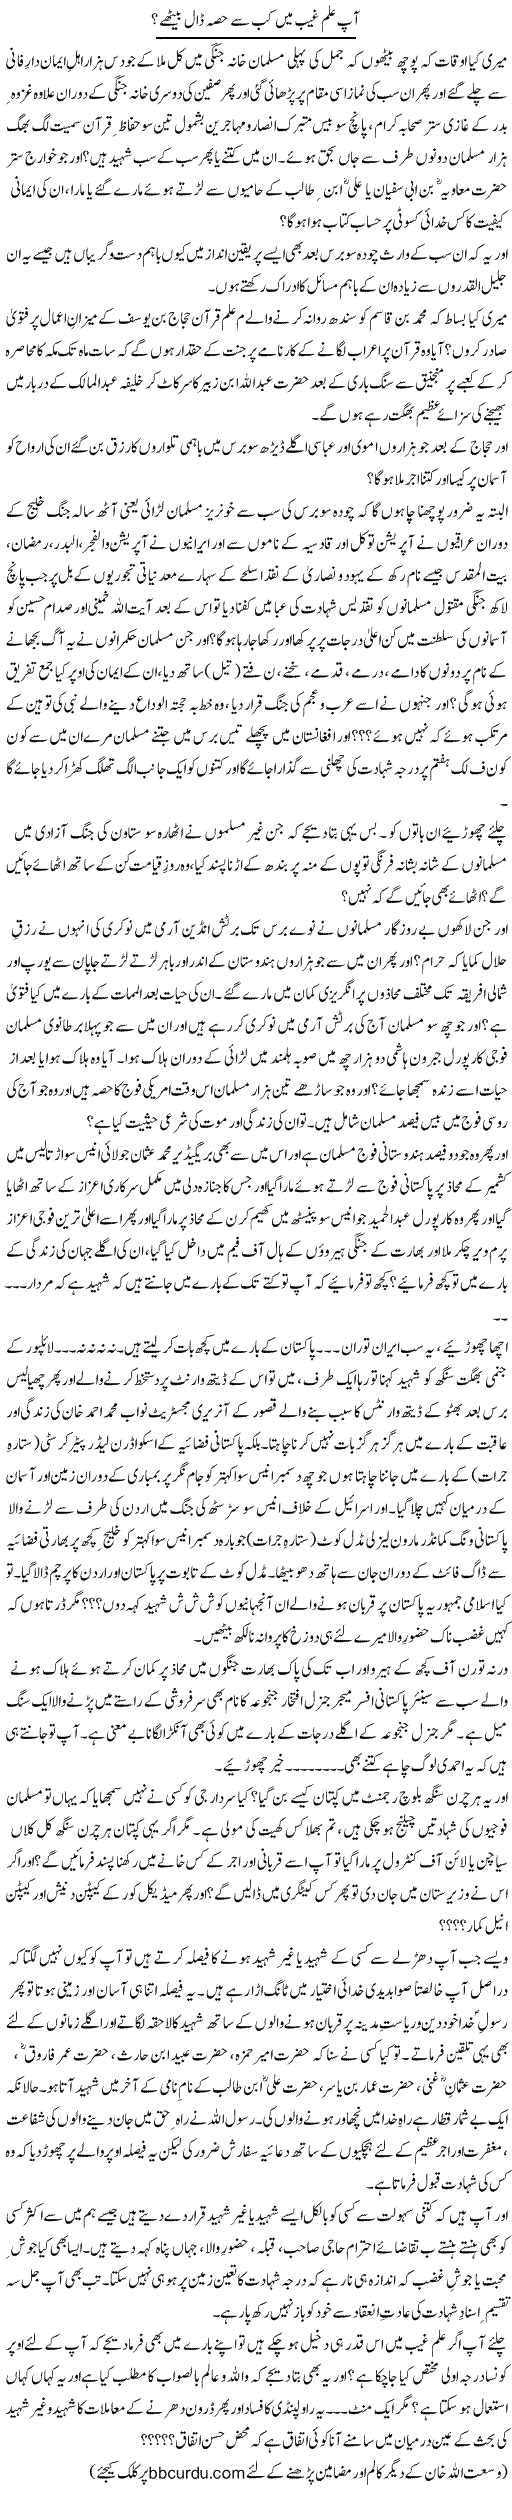 Aap Ilm Ghaib Main Kab Say Hissa Dal Baithay | Wusat Ullah Khan | Daily Urdu Columns